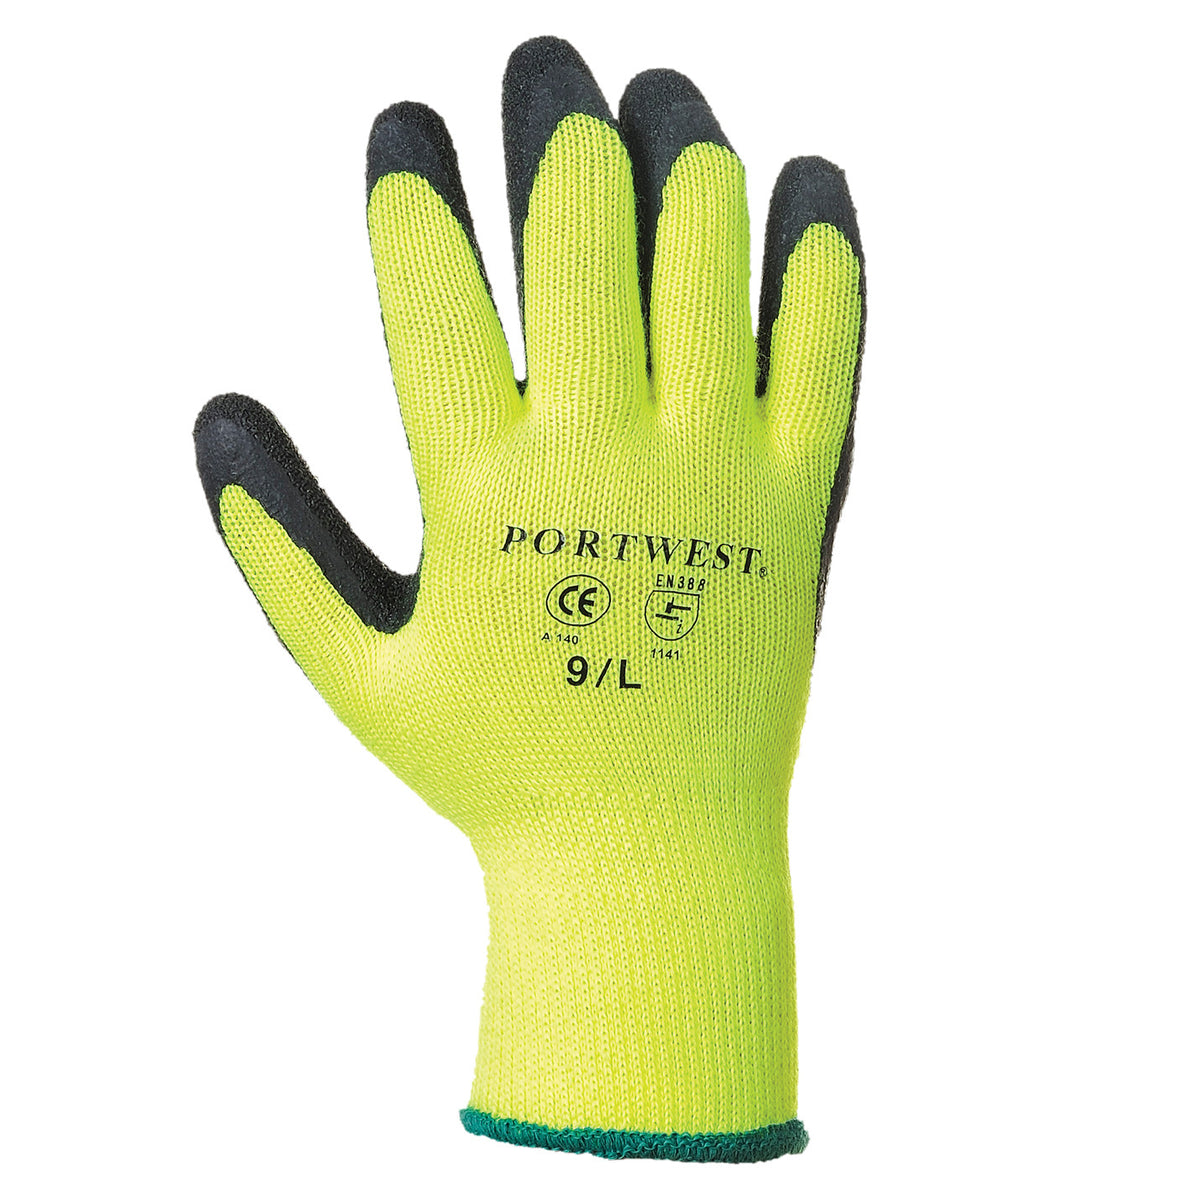 Thermal Grip Glove - peterdrew.com
 - 6